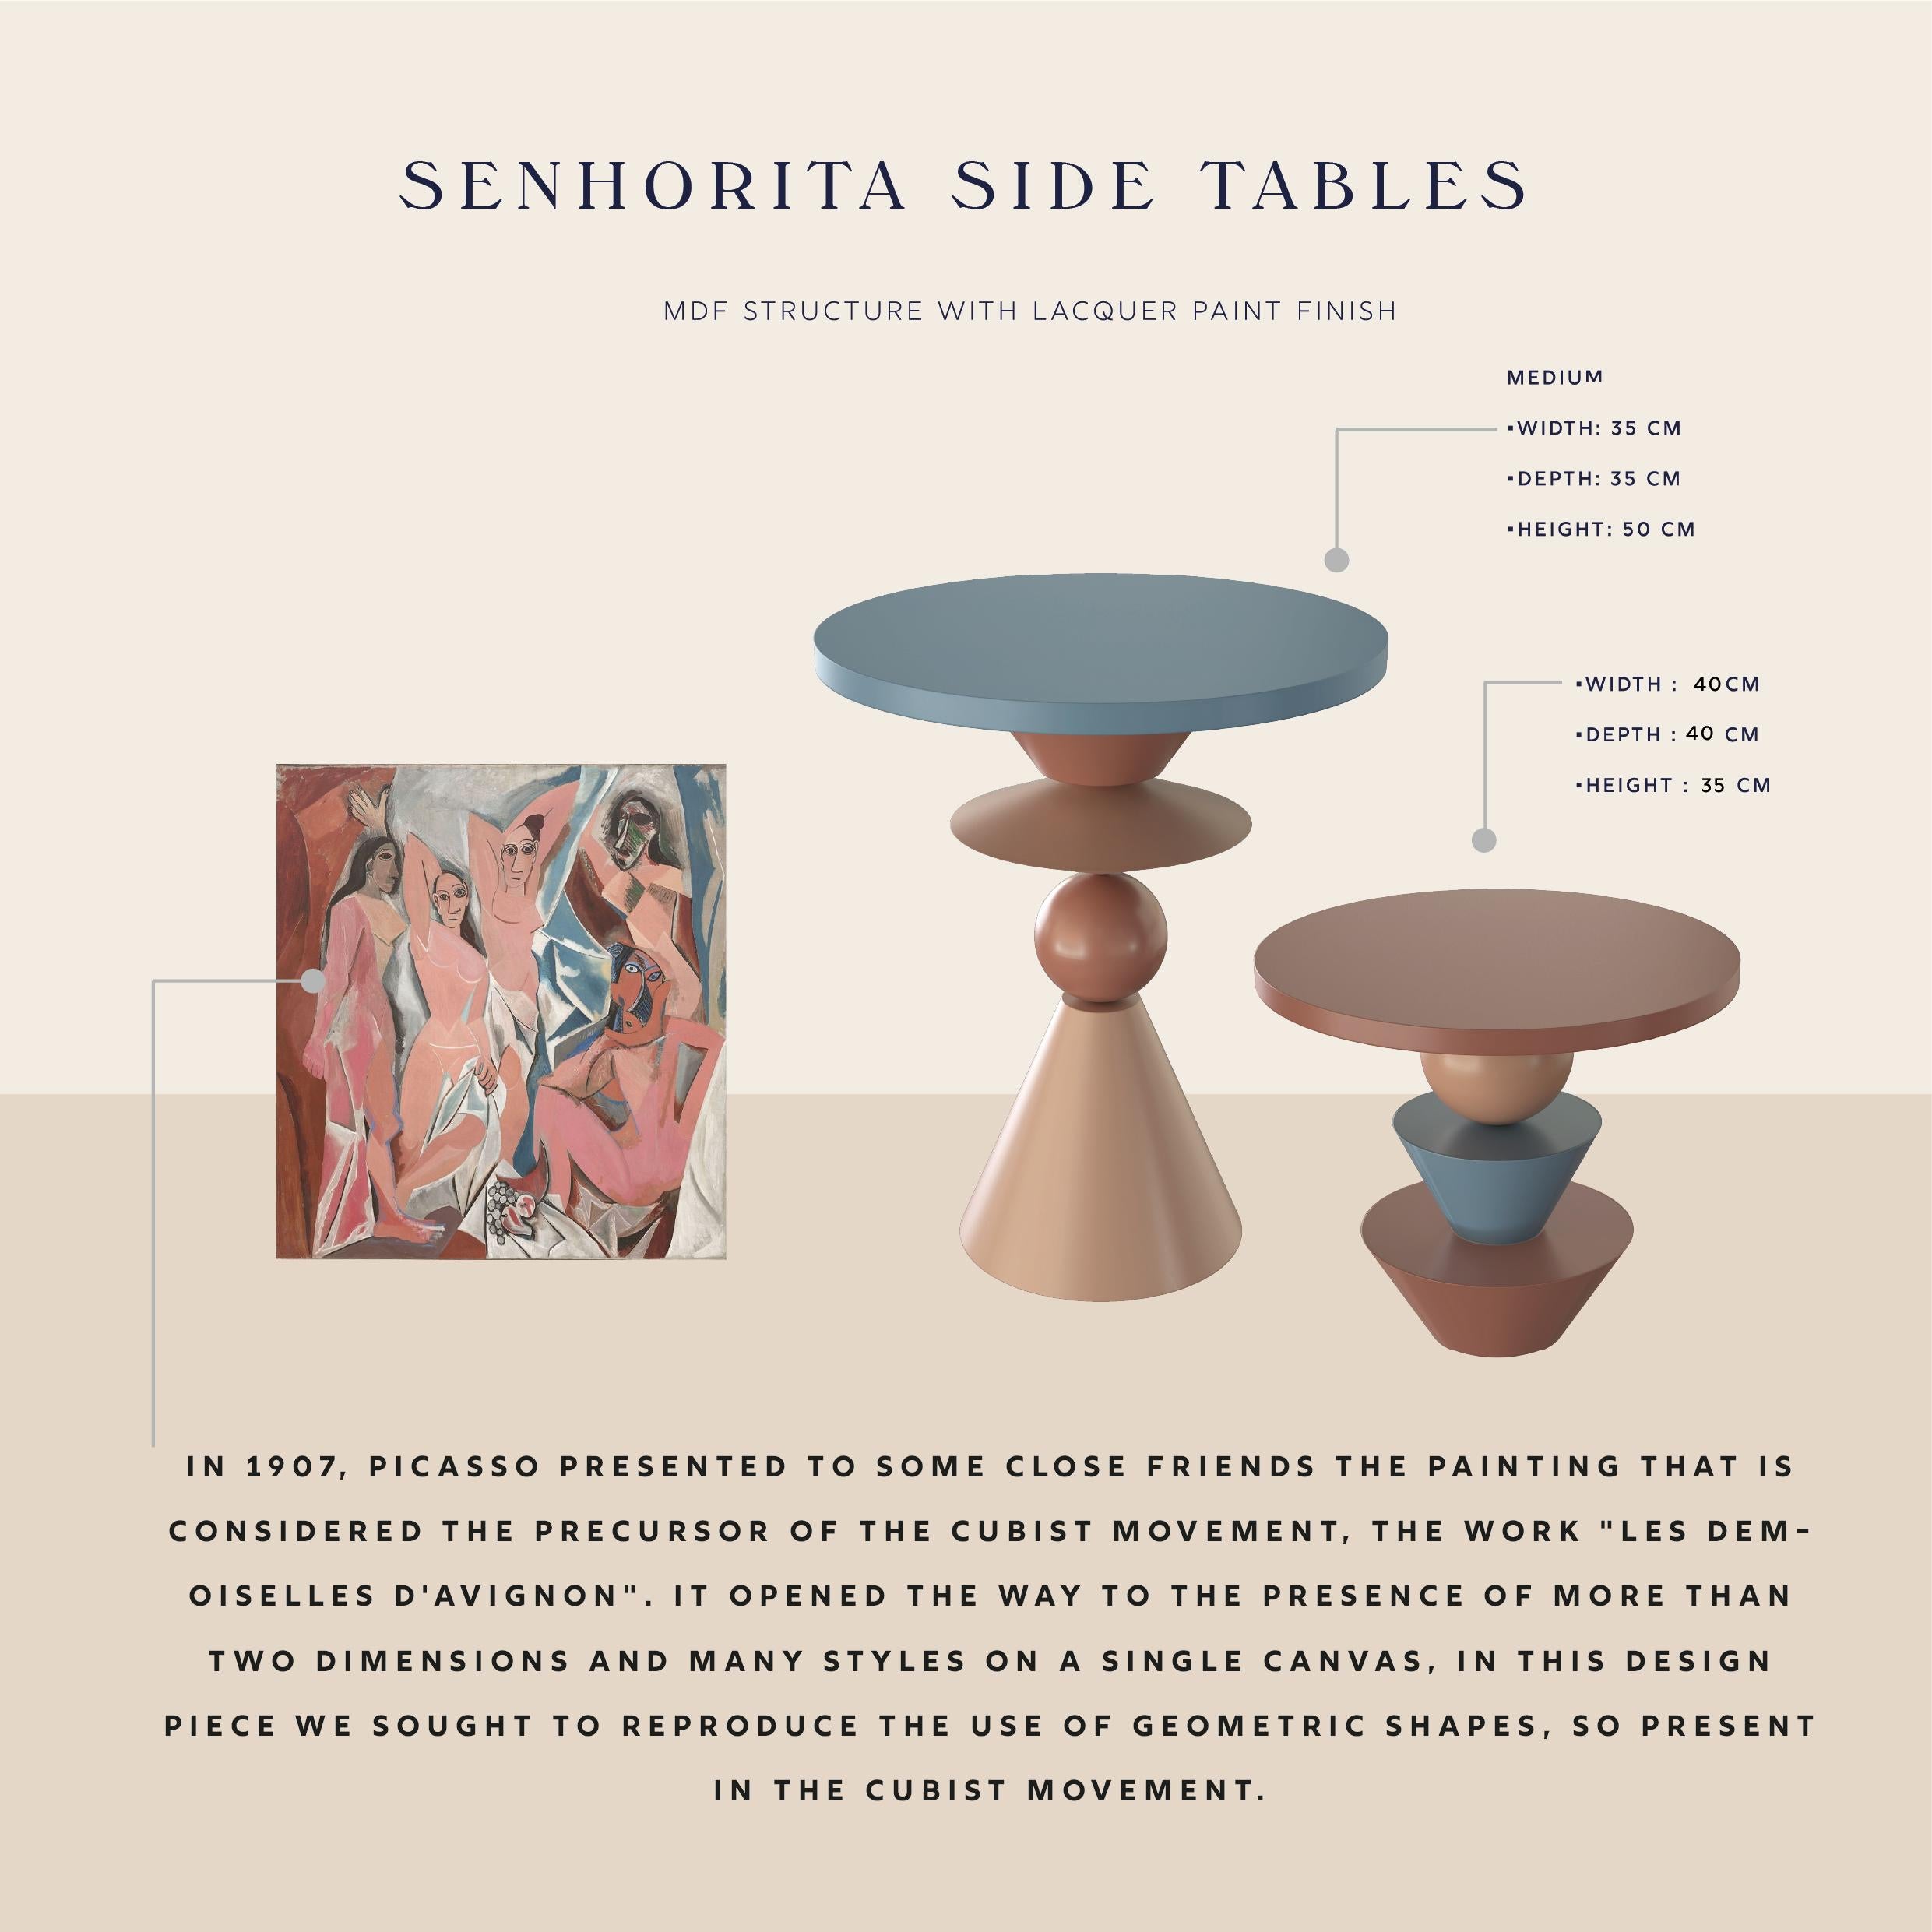 Brazilian Senhorita Side Table 'Medium' For Sale